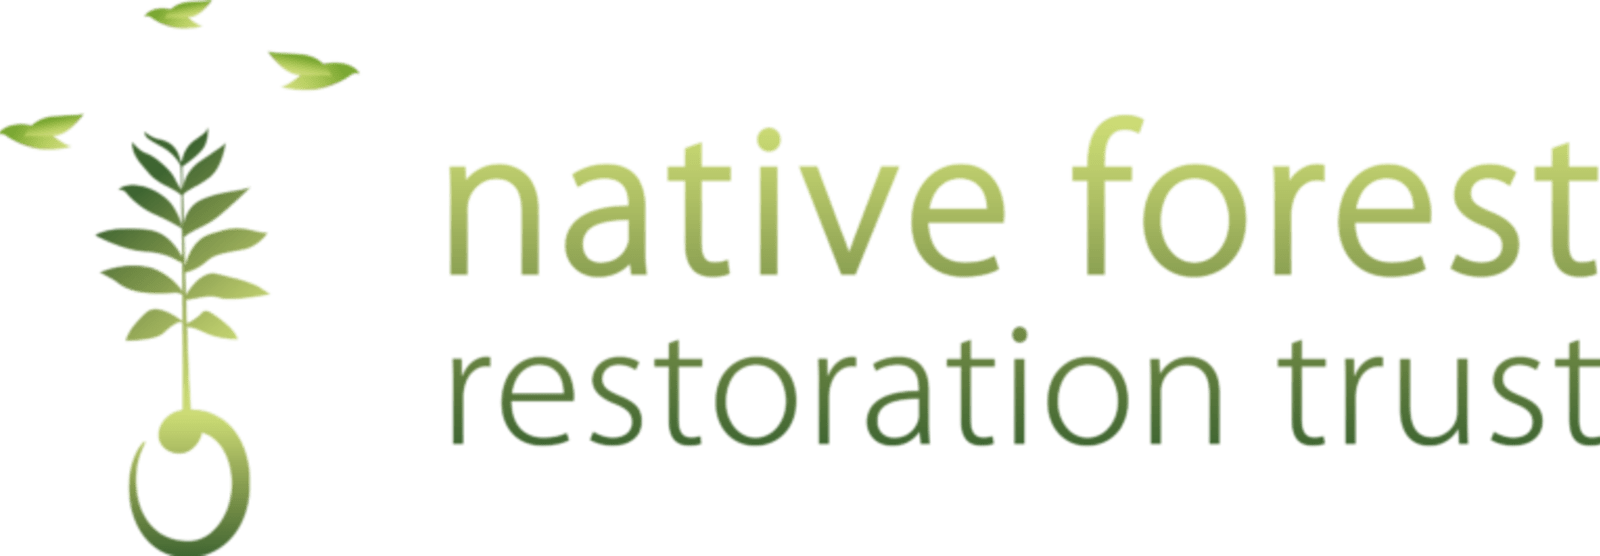 Native forest restoration trust logo